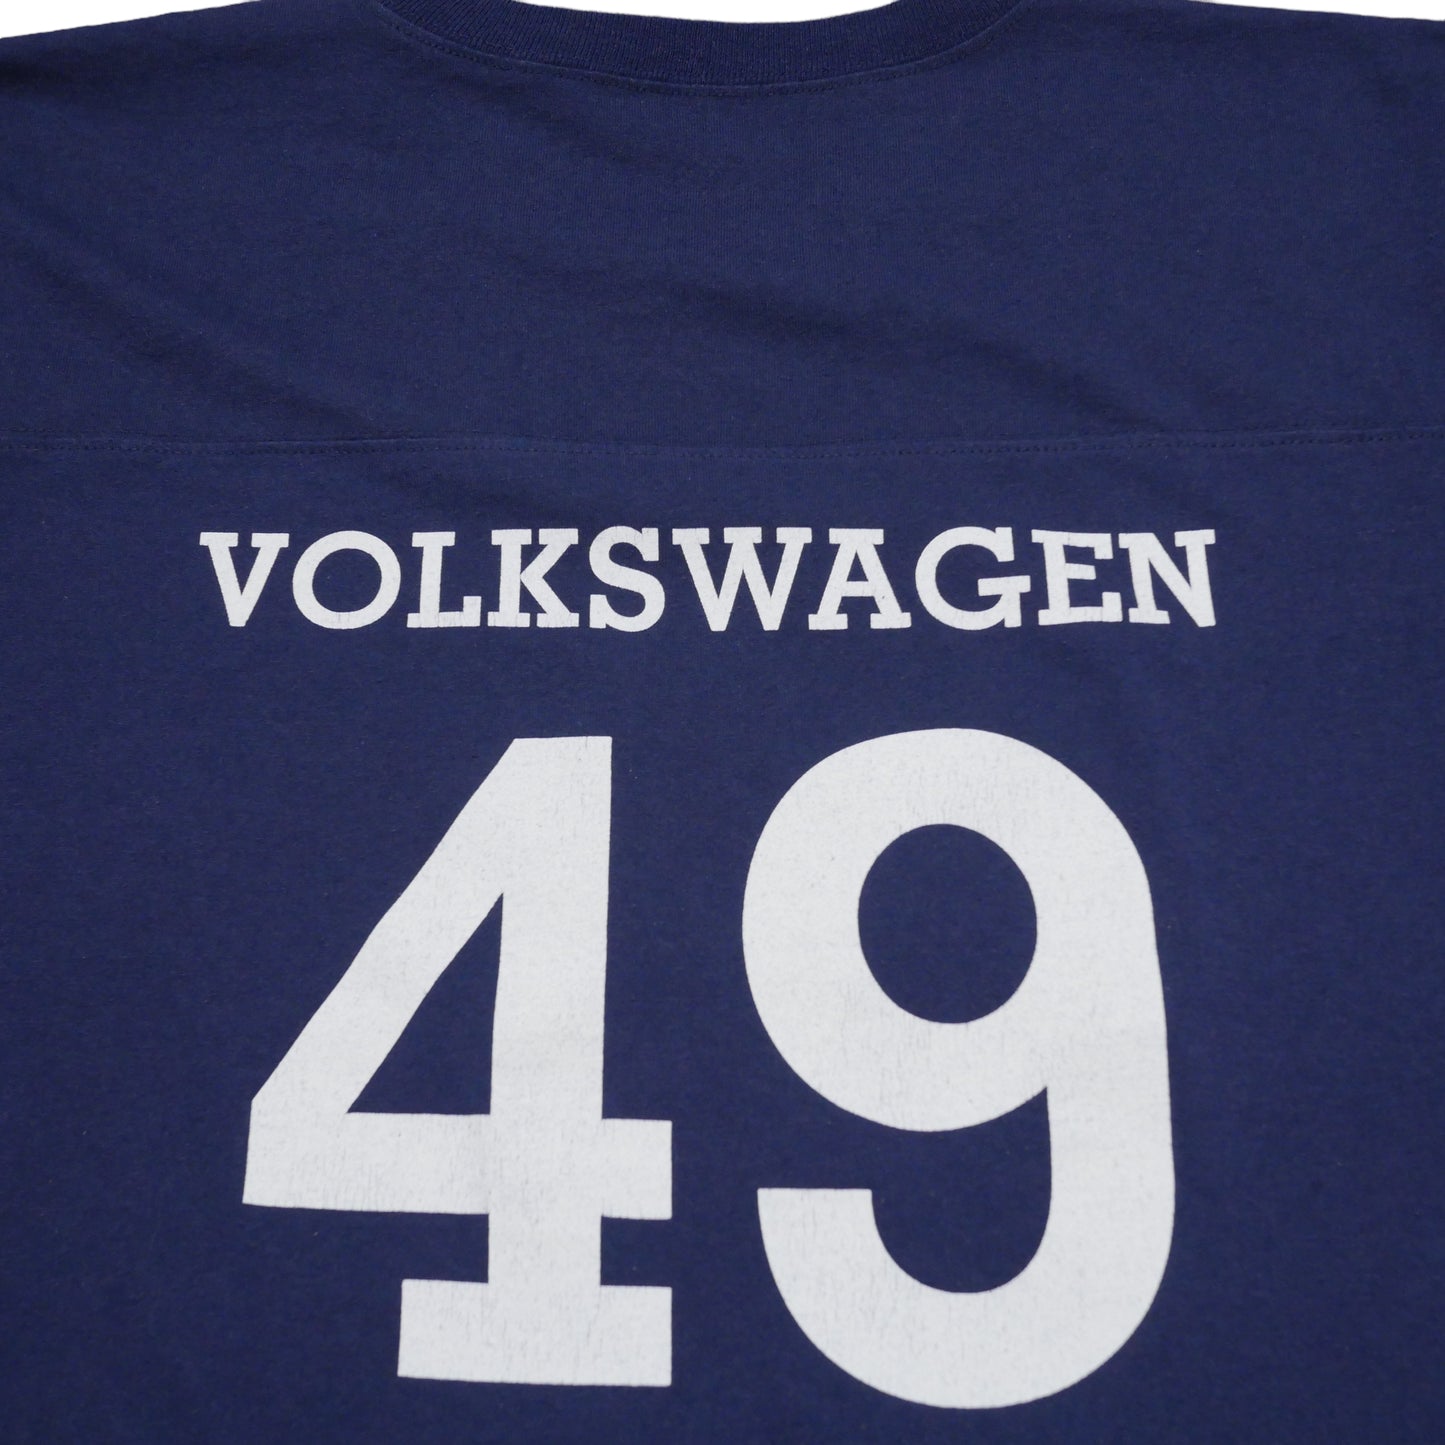 VW Volkswagen Raglan Jersey - Large